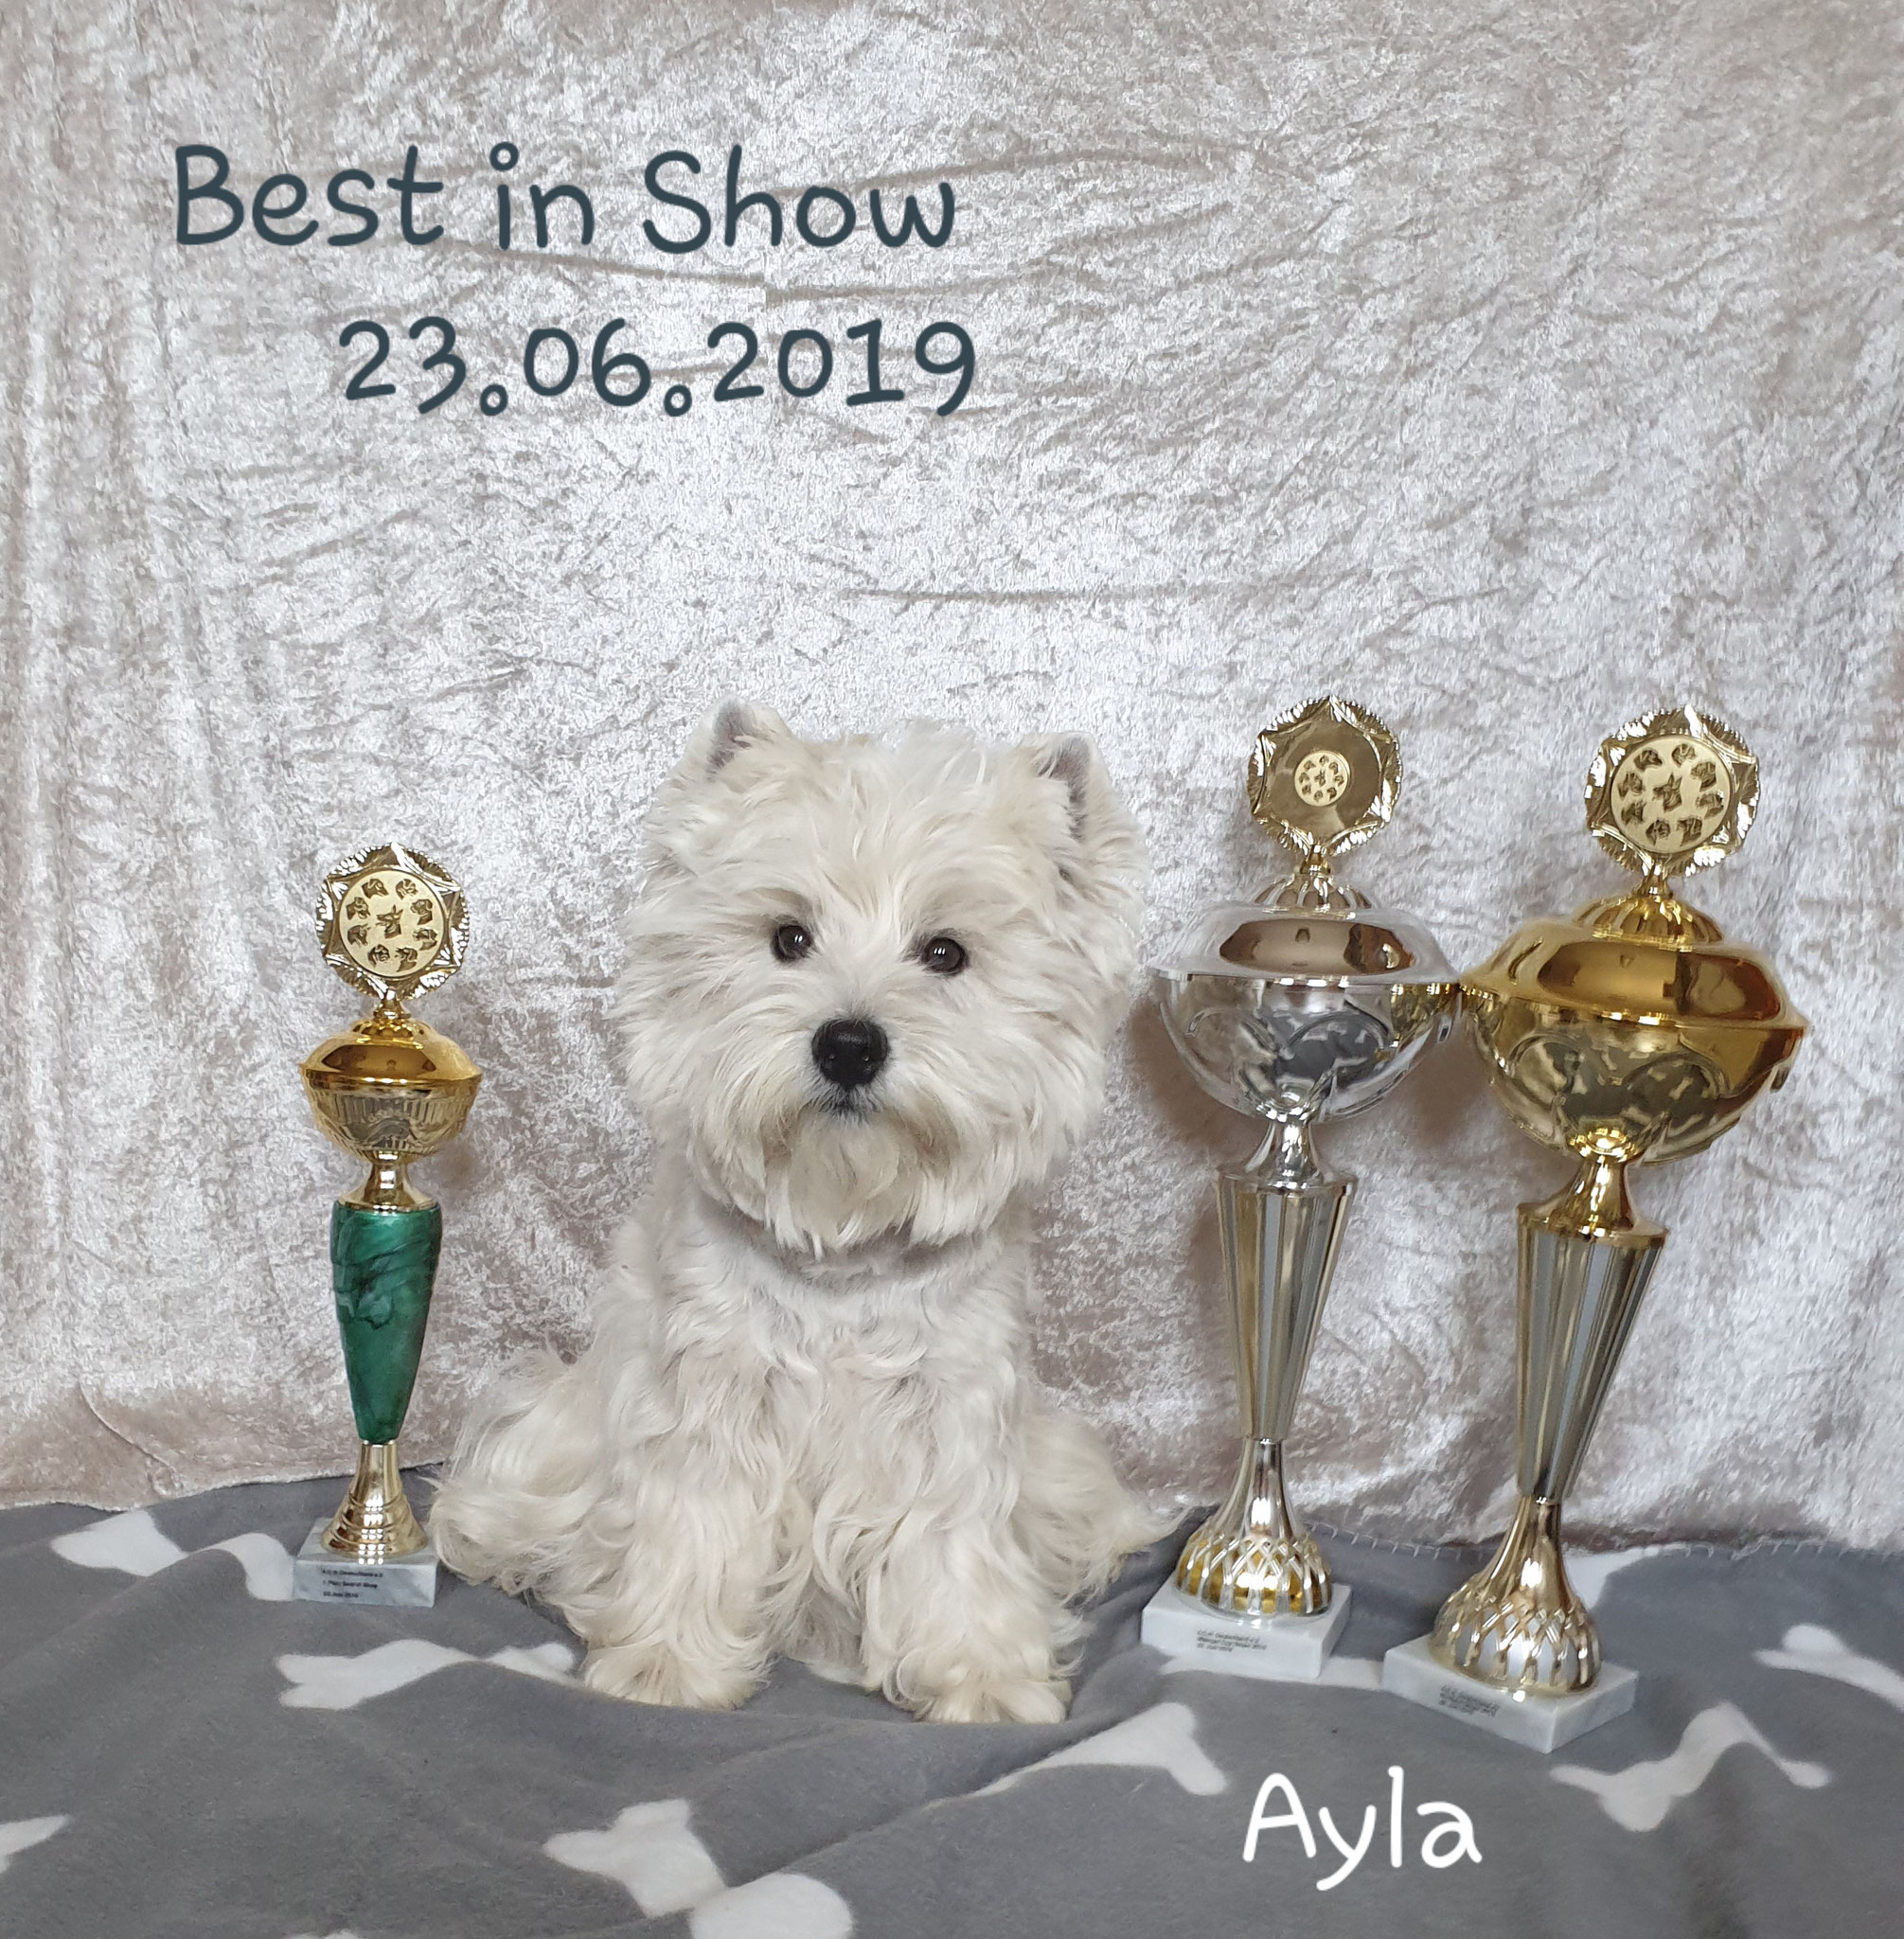 Ayla "Best in Show" 23.06.2019